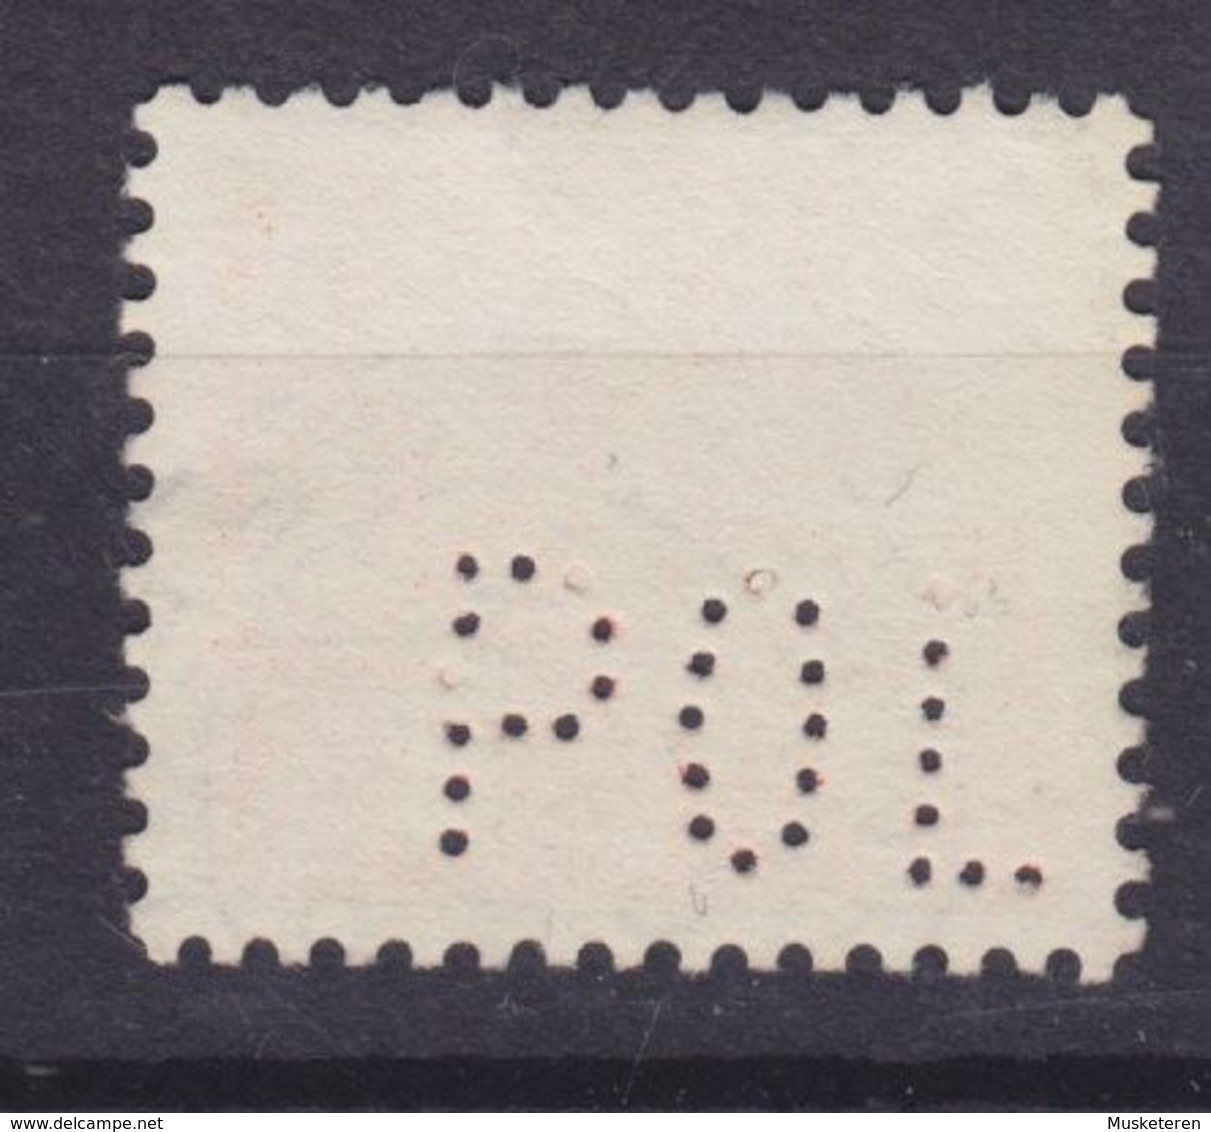 Denmark Perfin Perforé Lochung (P33) 'POL' Politikens Hus (Newspaper) Wellenlinien Stamp (2 Scans) - Variétés Et Curiosités